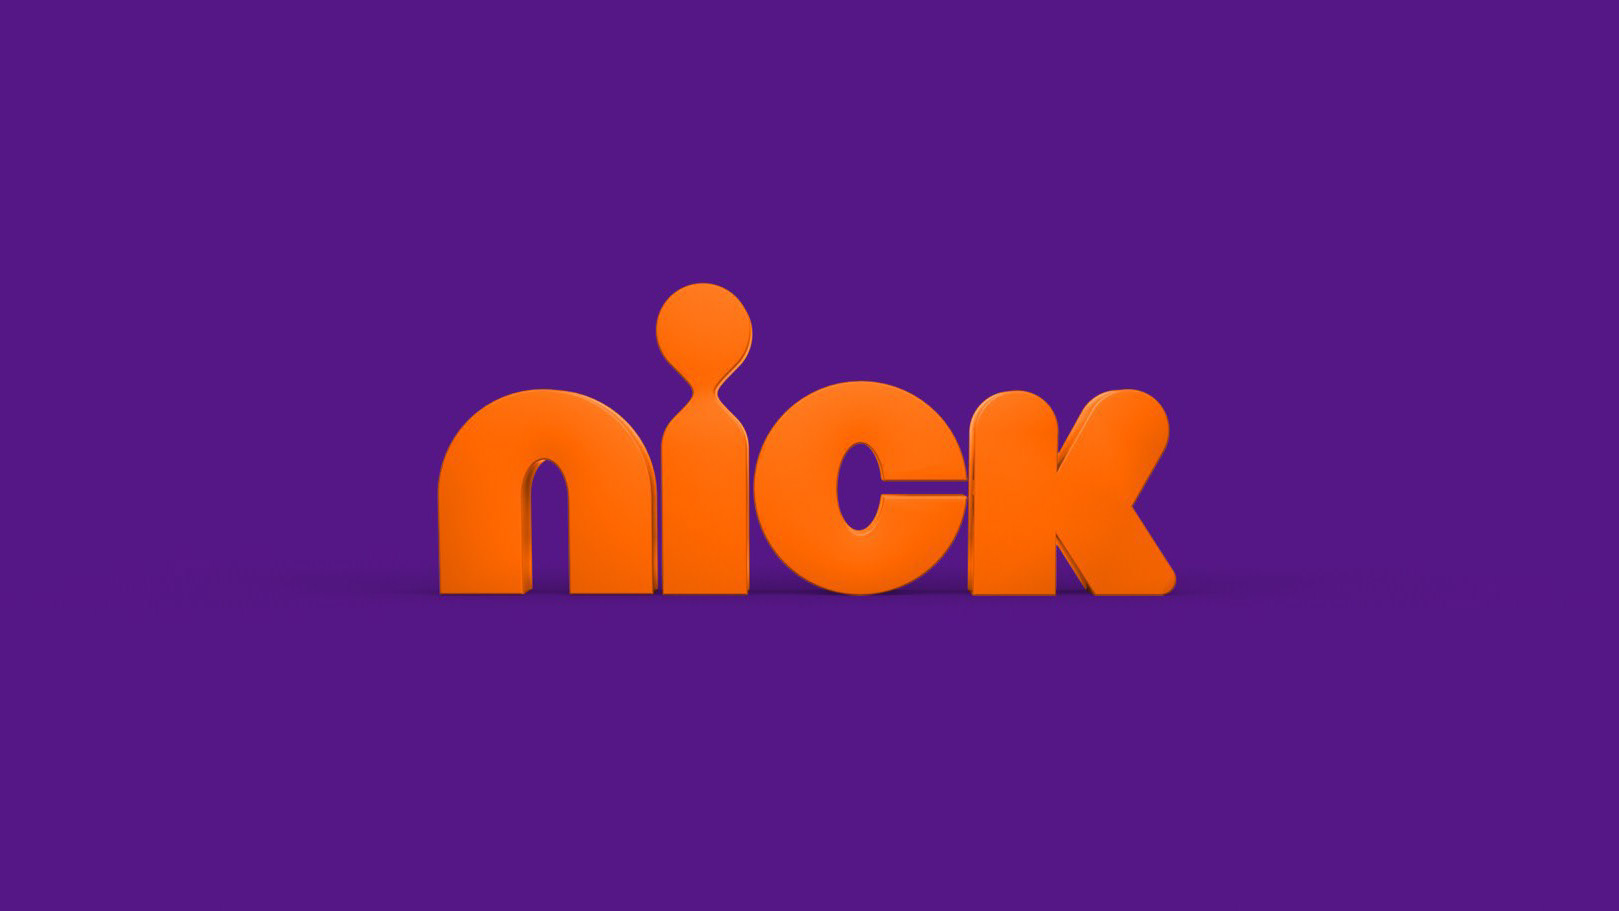 Nick channel. Никелодеон. Канал Nickelodeon. Телеканал Никелодеон. Никелодеон логотип.